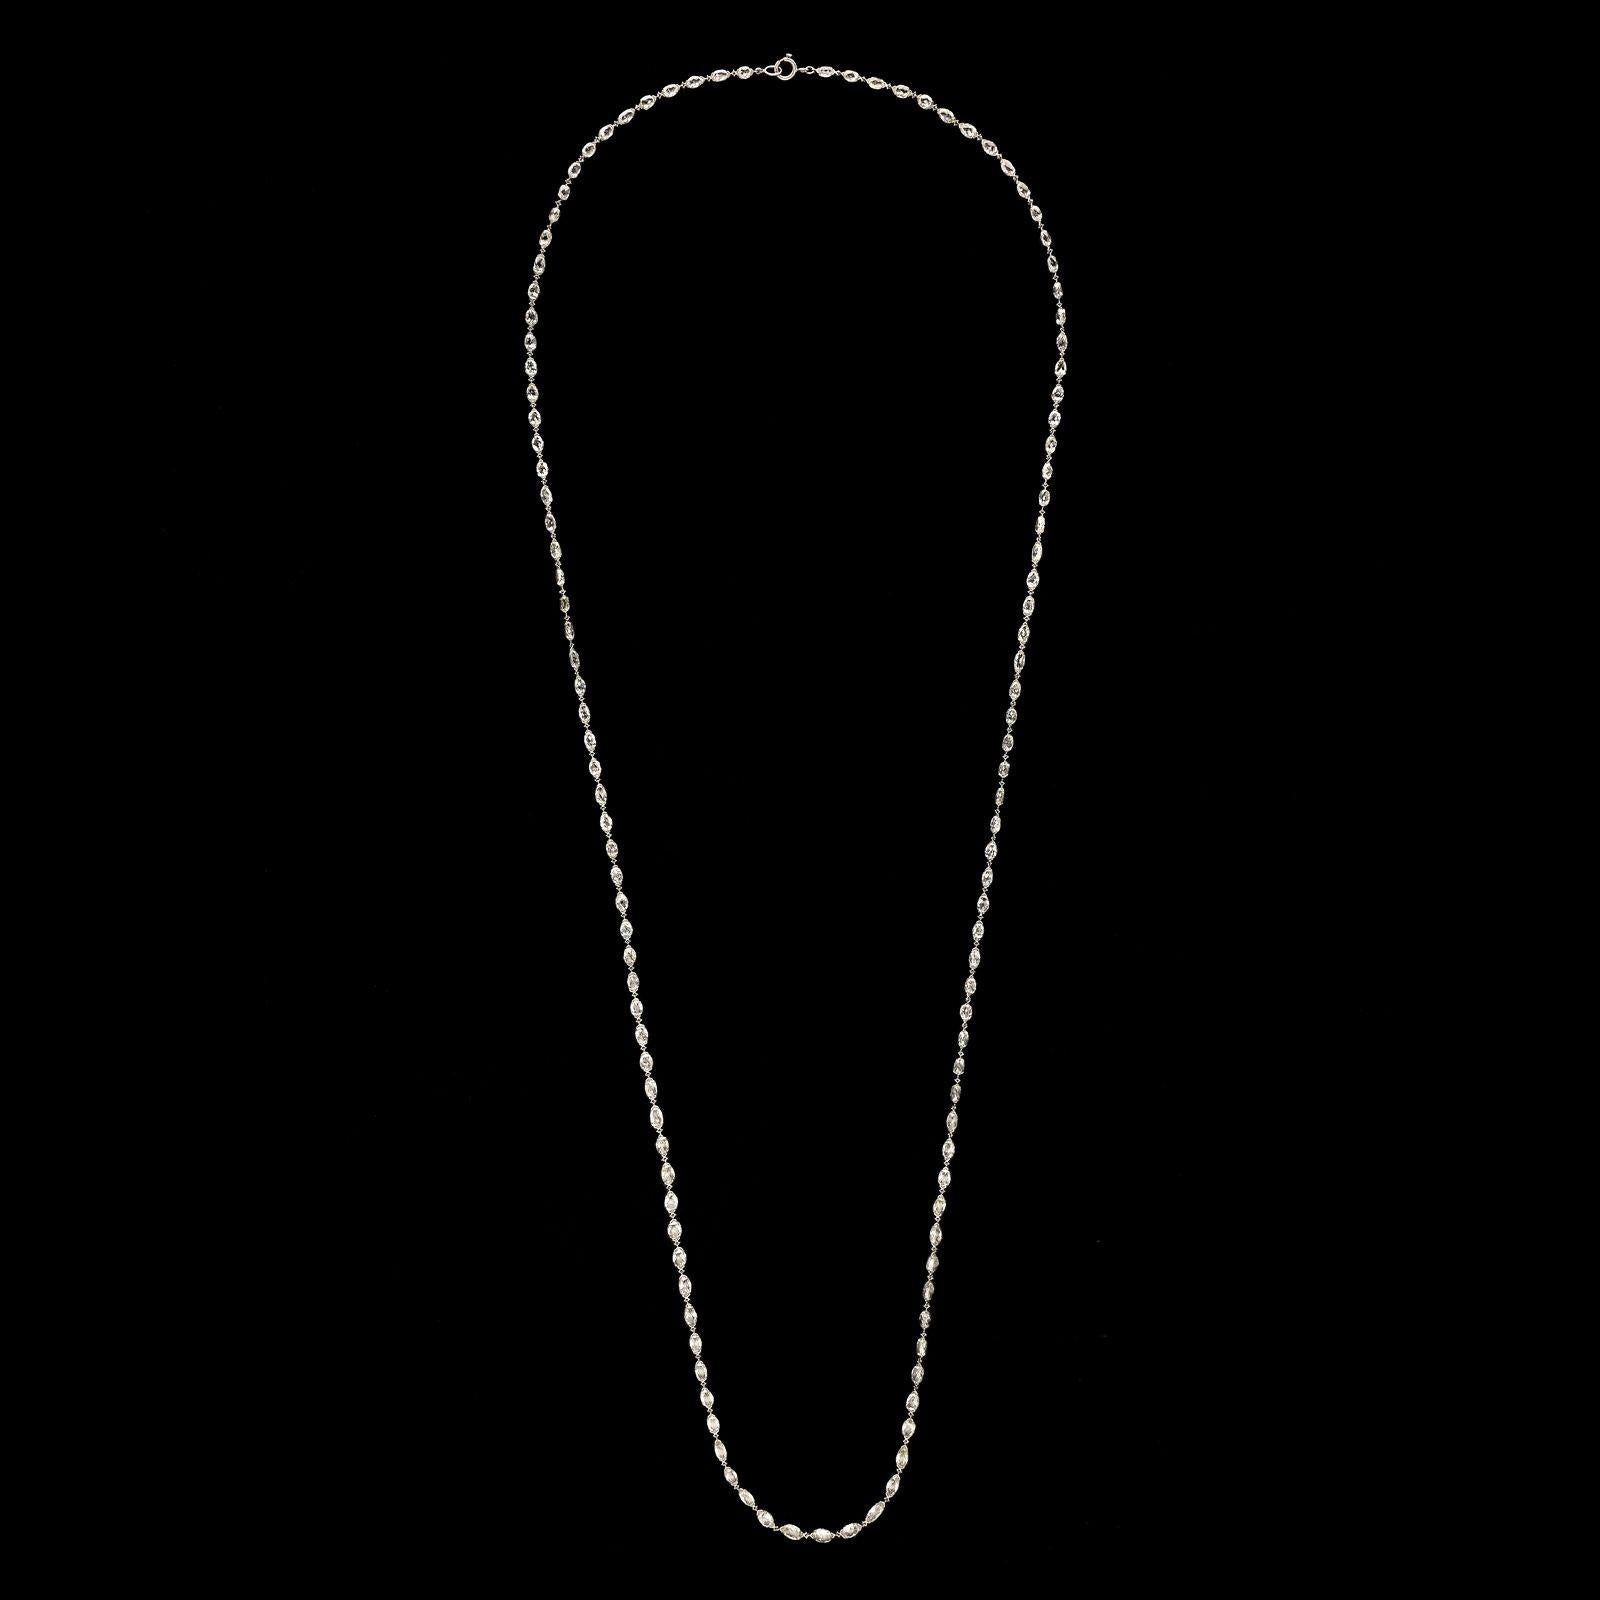 Briolette Cut Hancocks Briolette Diamond and Platinum Necklace Set with 22.99cts For Sale